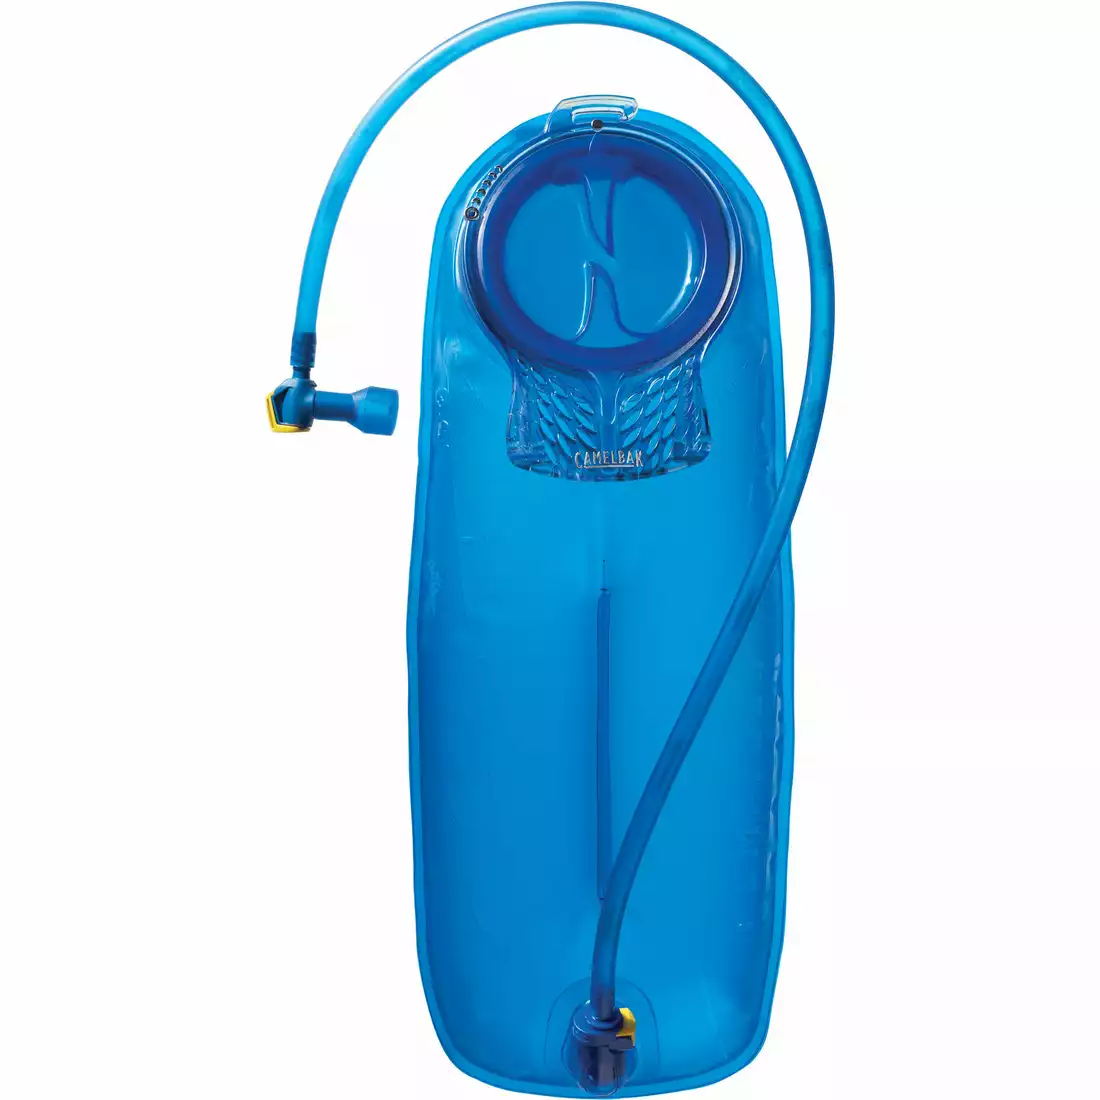 CAMELBAK SS15 M.U.L.E. 100 2014  plecak z bukłakiem. pure blue